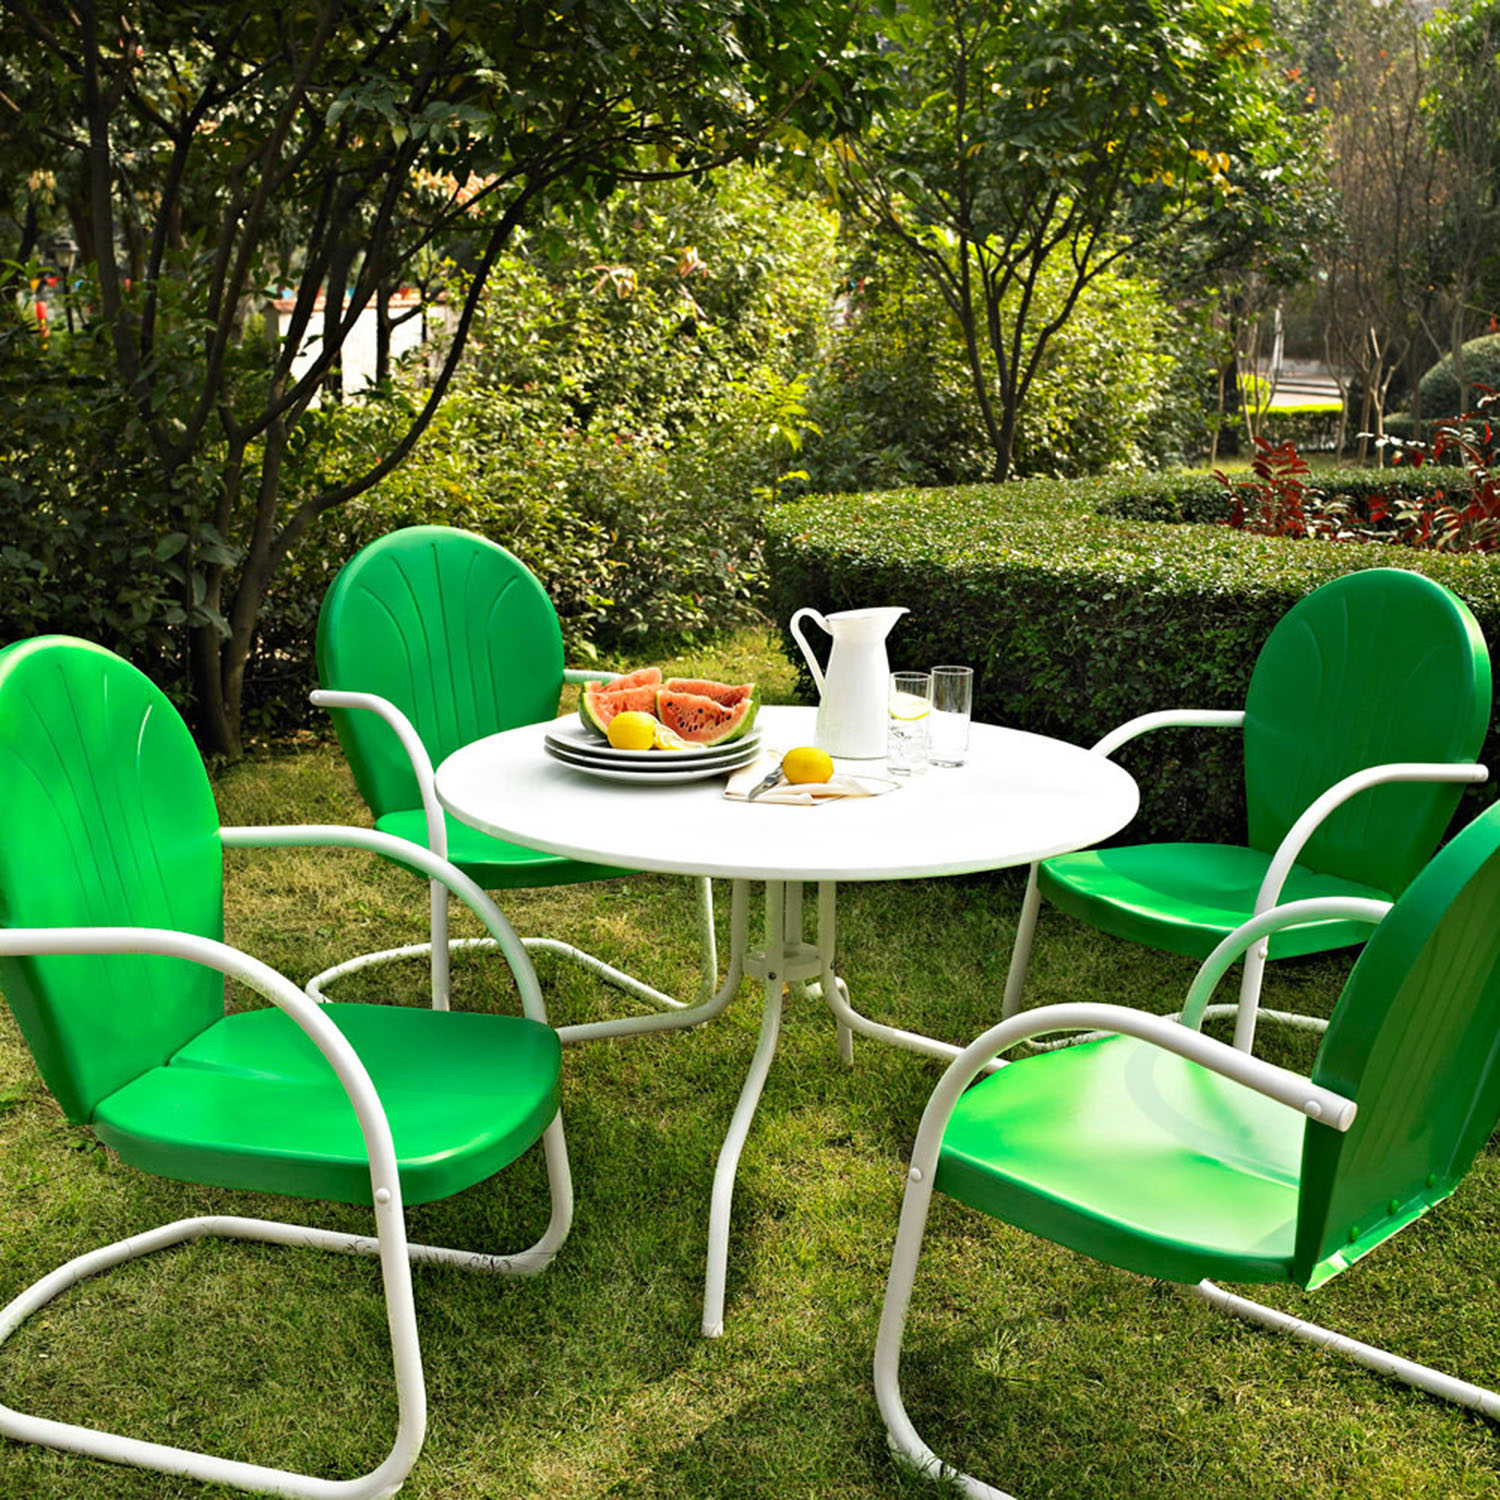  aluminium garden furniture sets